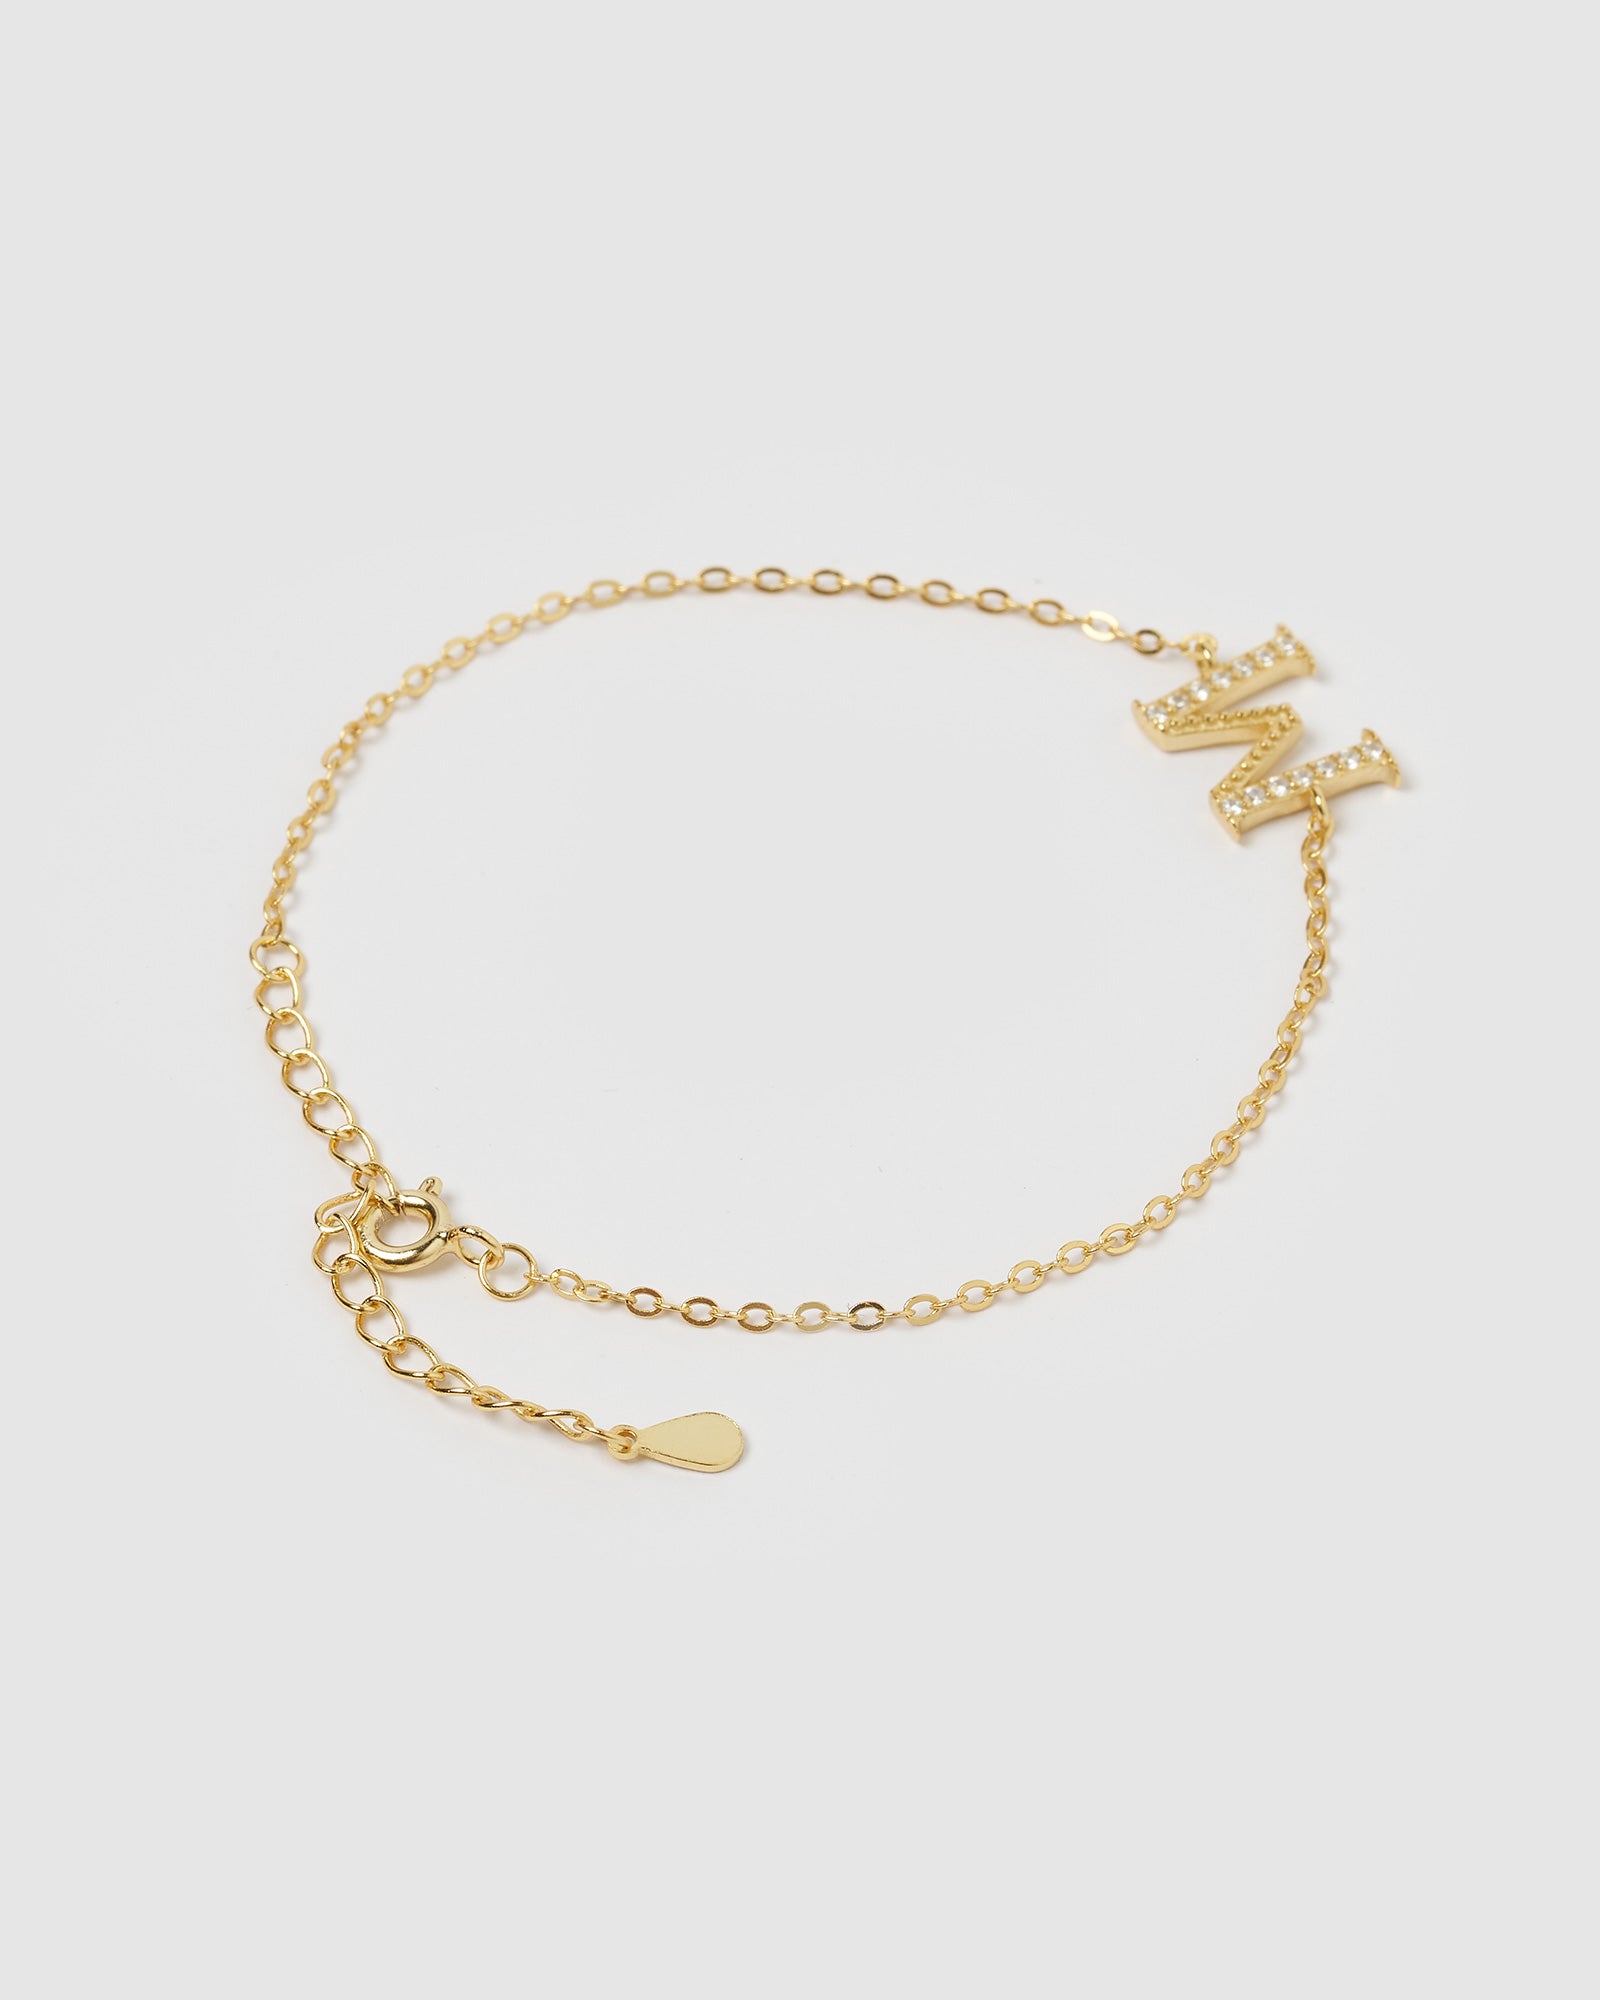 Kidult Ladies Bracelet Symbols Letter M 231555M - New Fashion Jewels